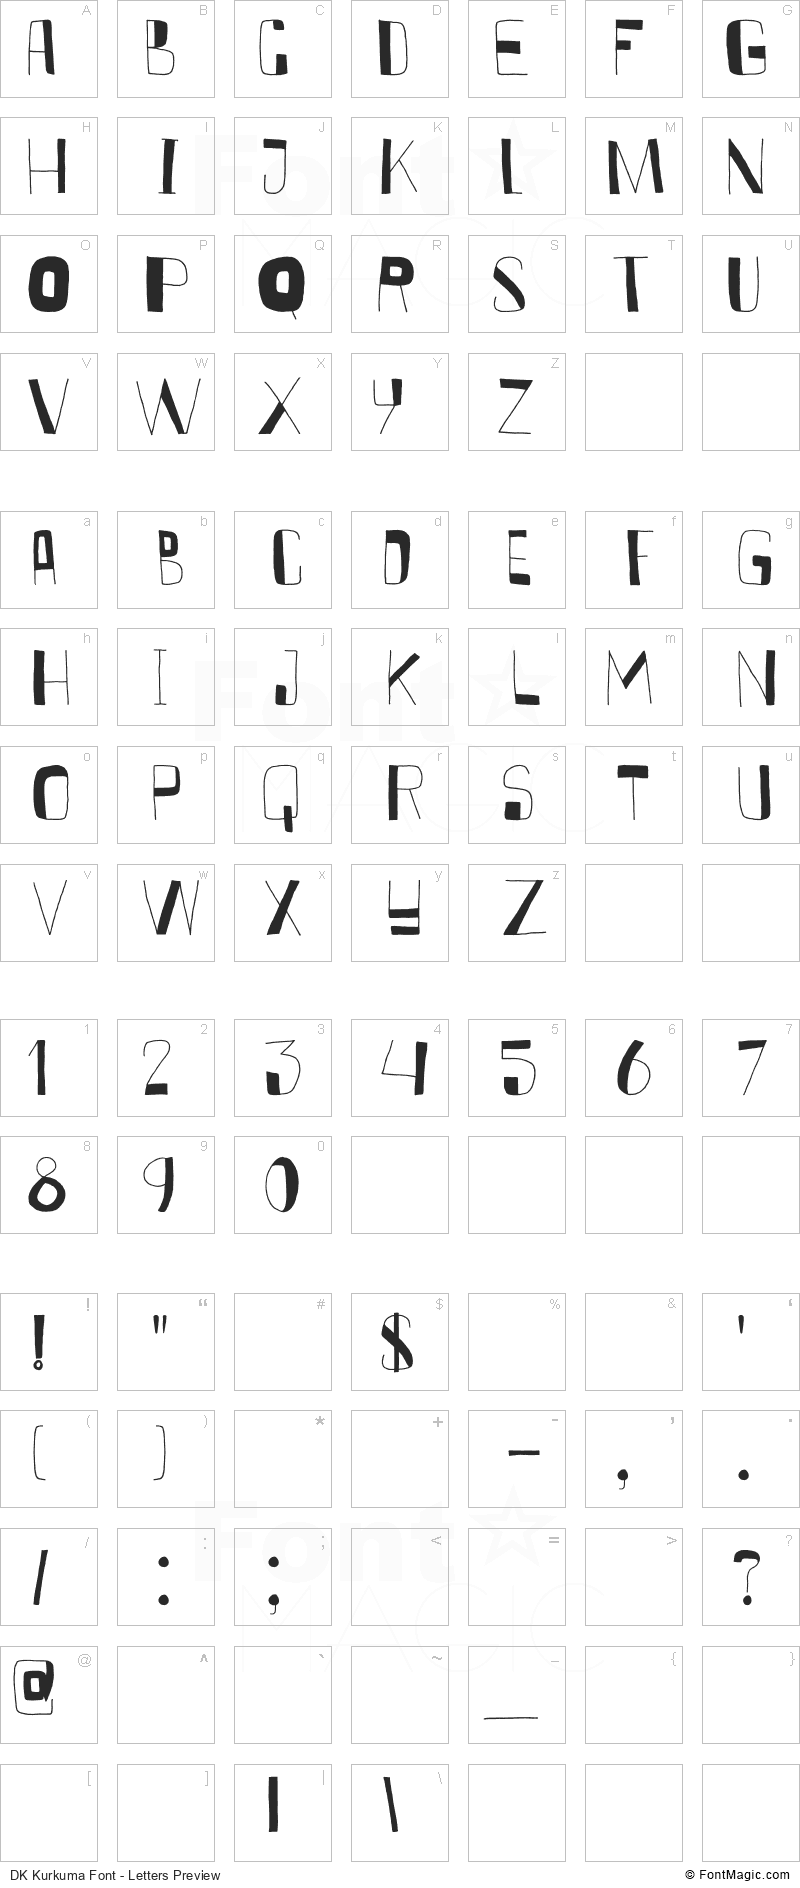 DK Kurkuma Font - All Latters Preview Chart